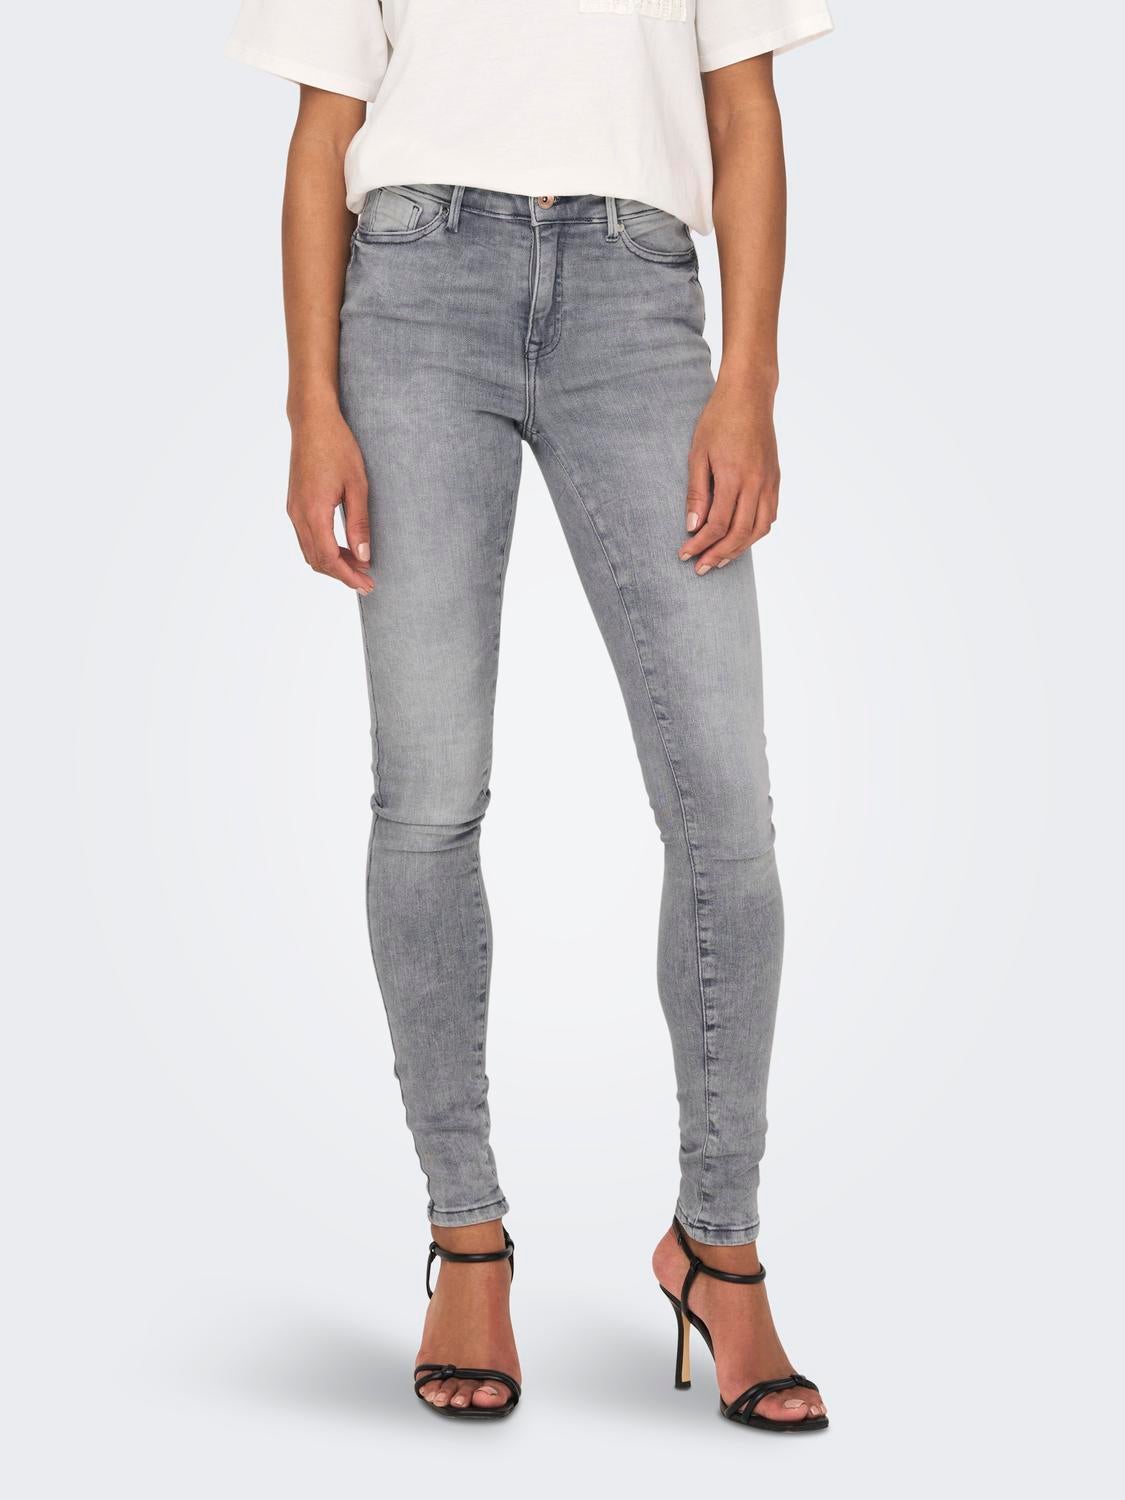 Grau XL Rabatt 66 % DAMEN Jeans Elastisch NoName Jegging & Skinny & Slim 